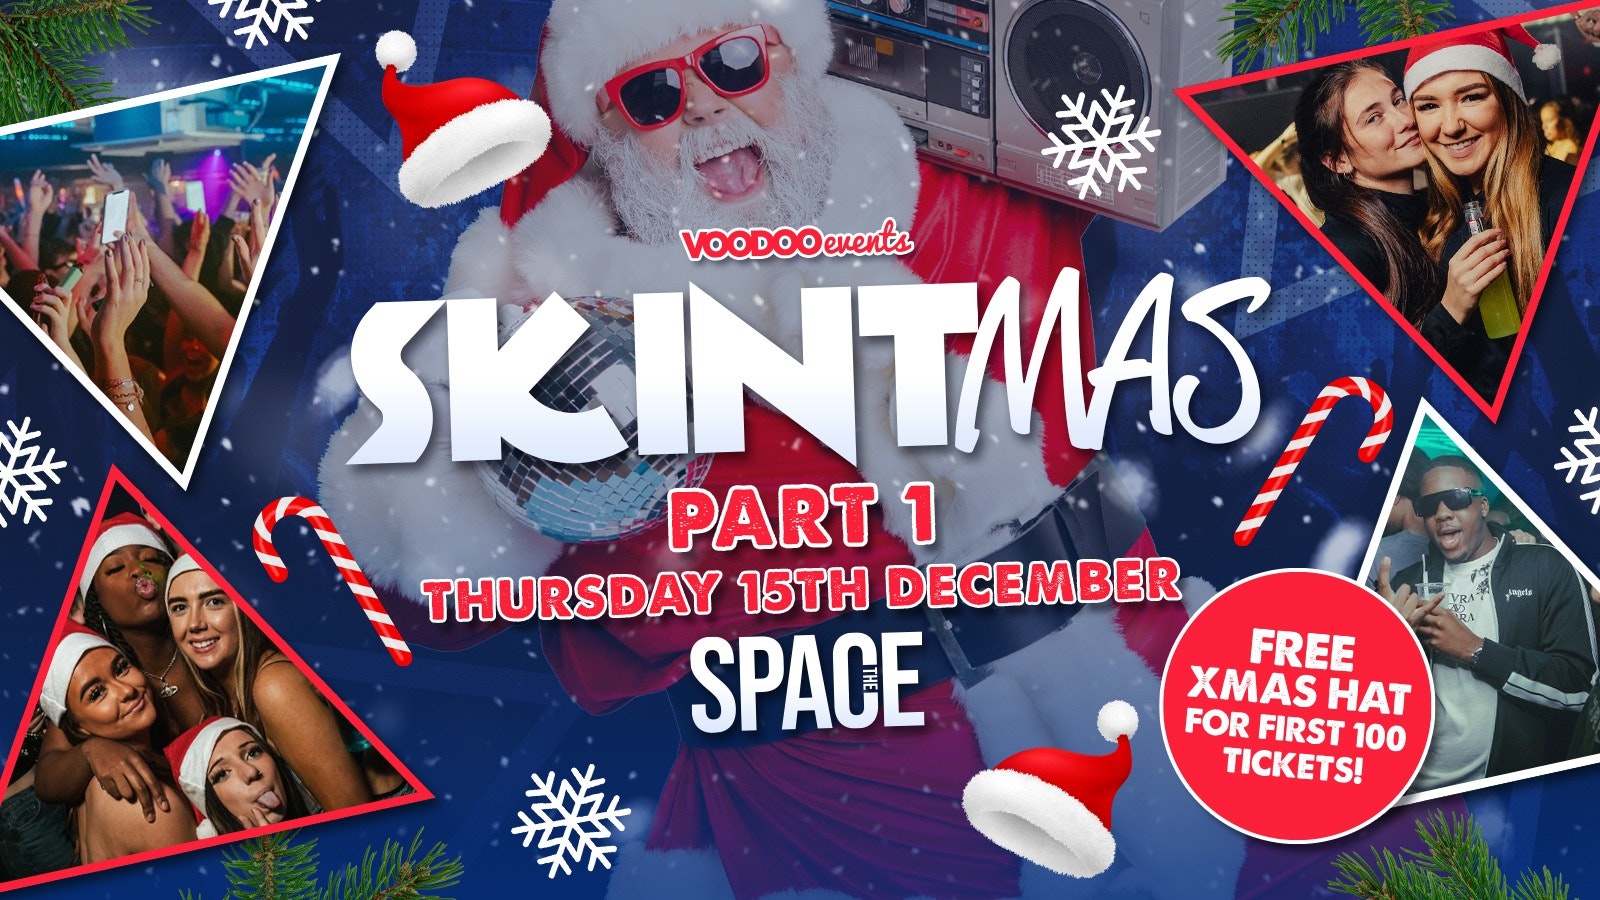 Skintmas Part 1 Thursdays at Space – 15th December